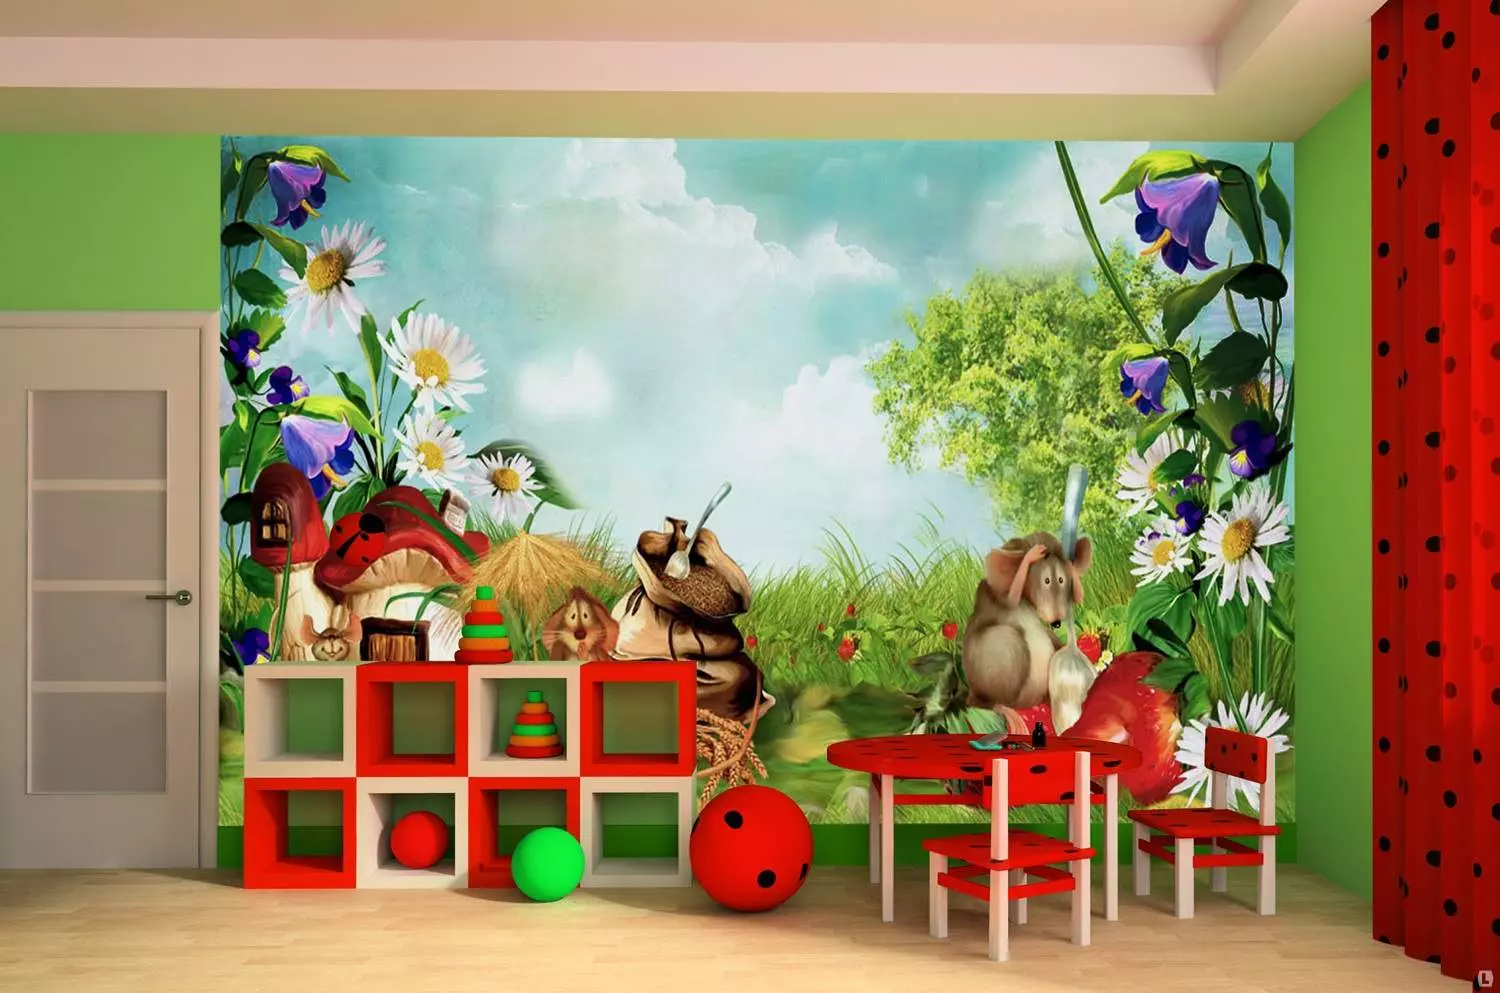 Wall Mural ing Nursery: bungah utawa utopia?